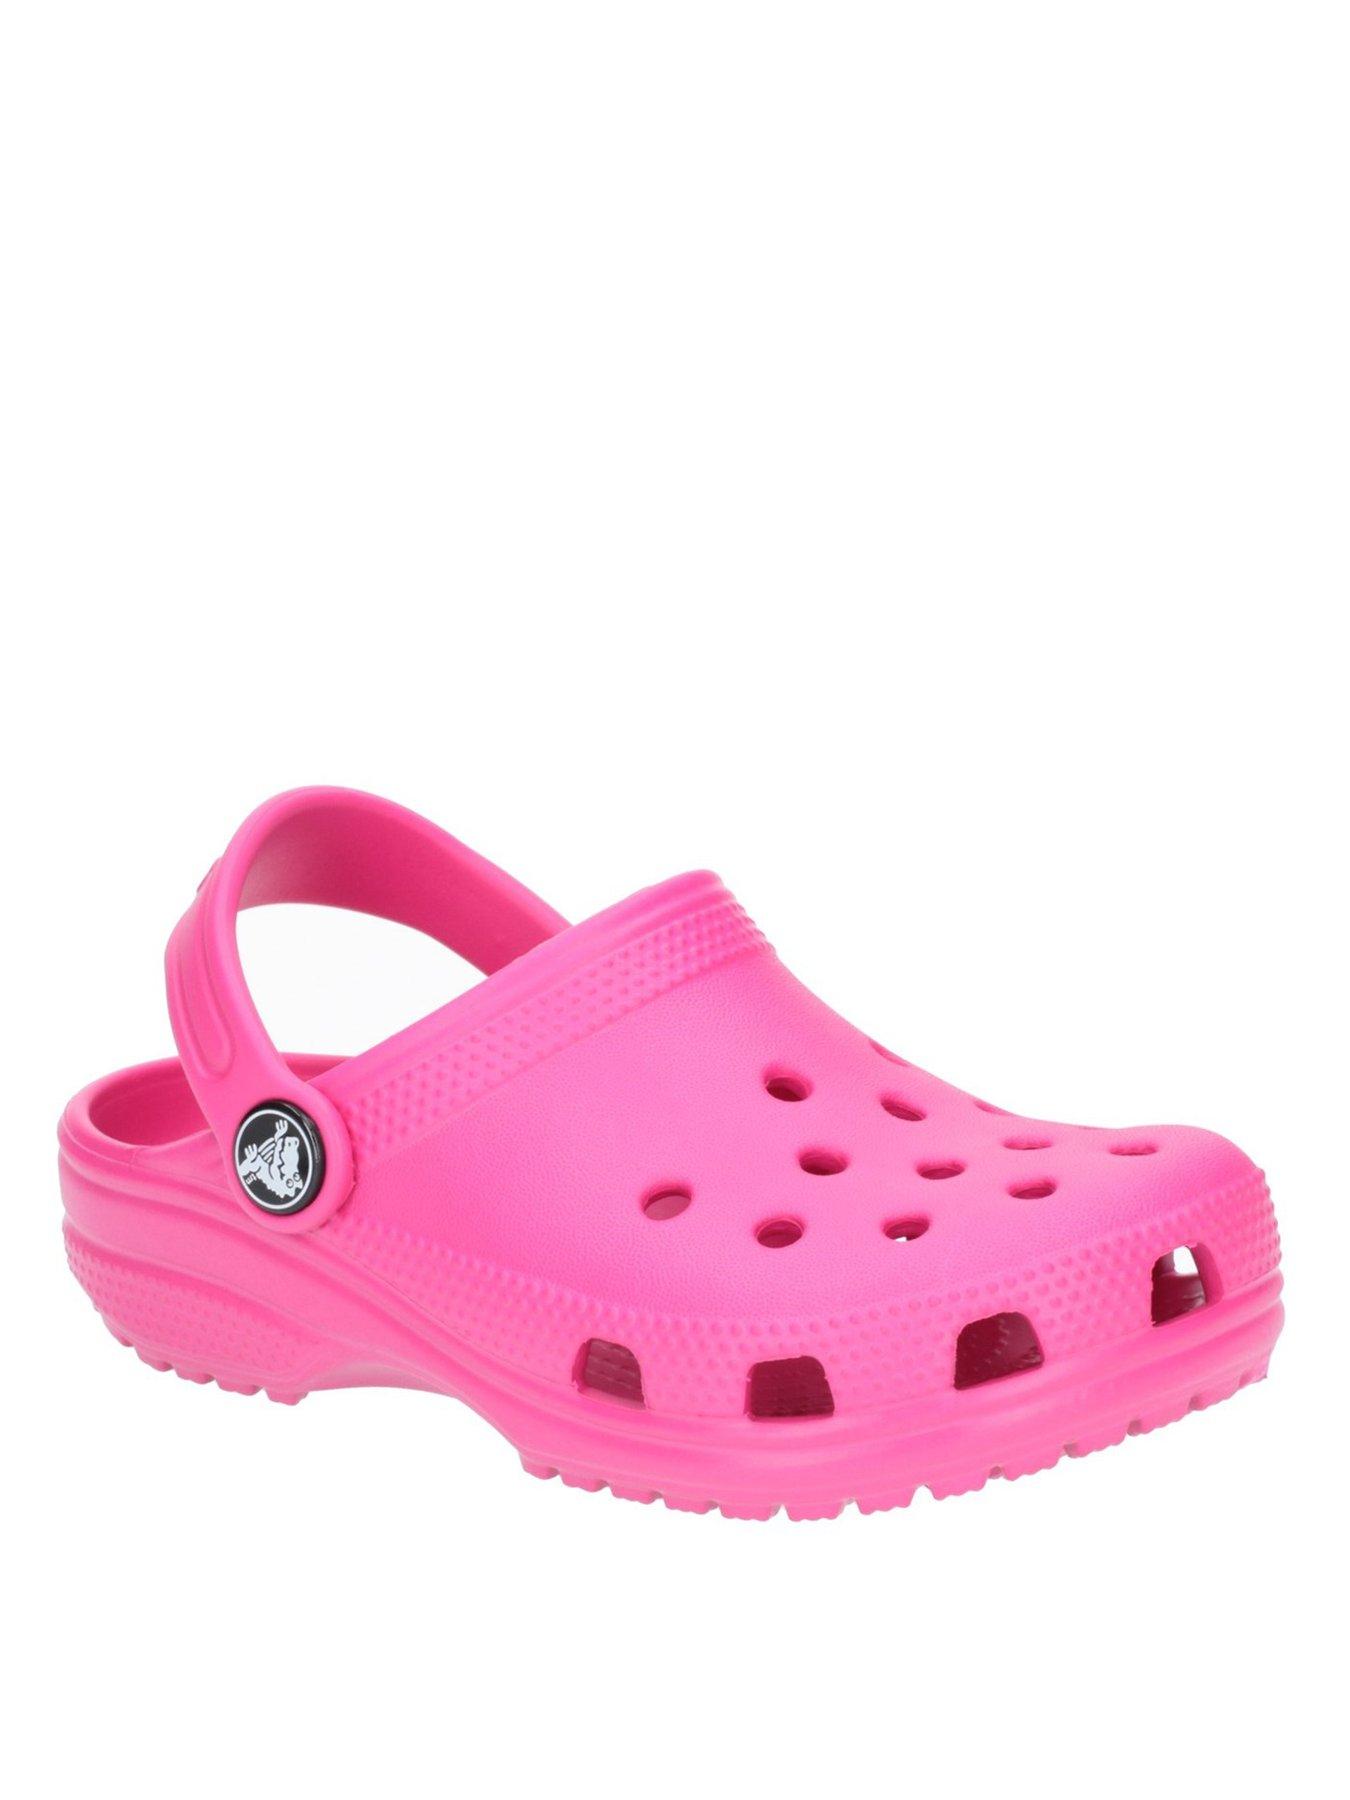 girls crocs size 6